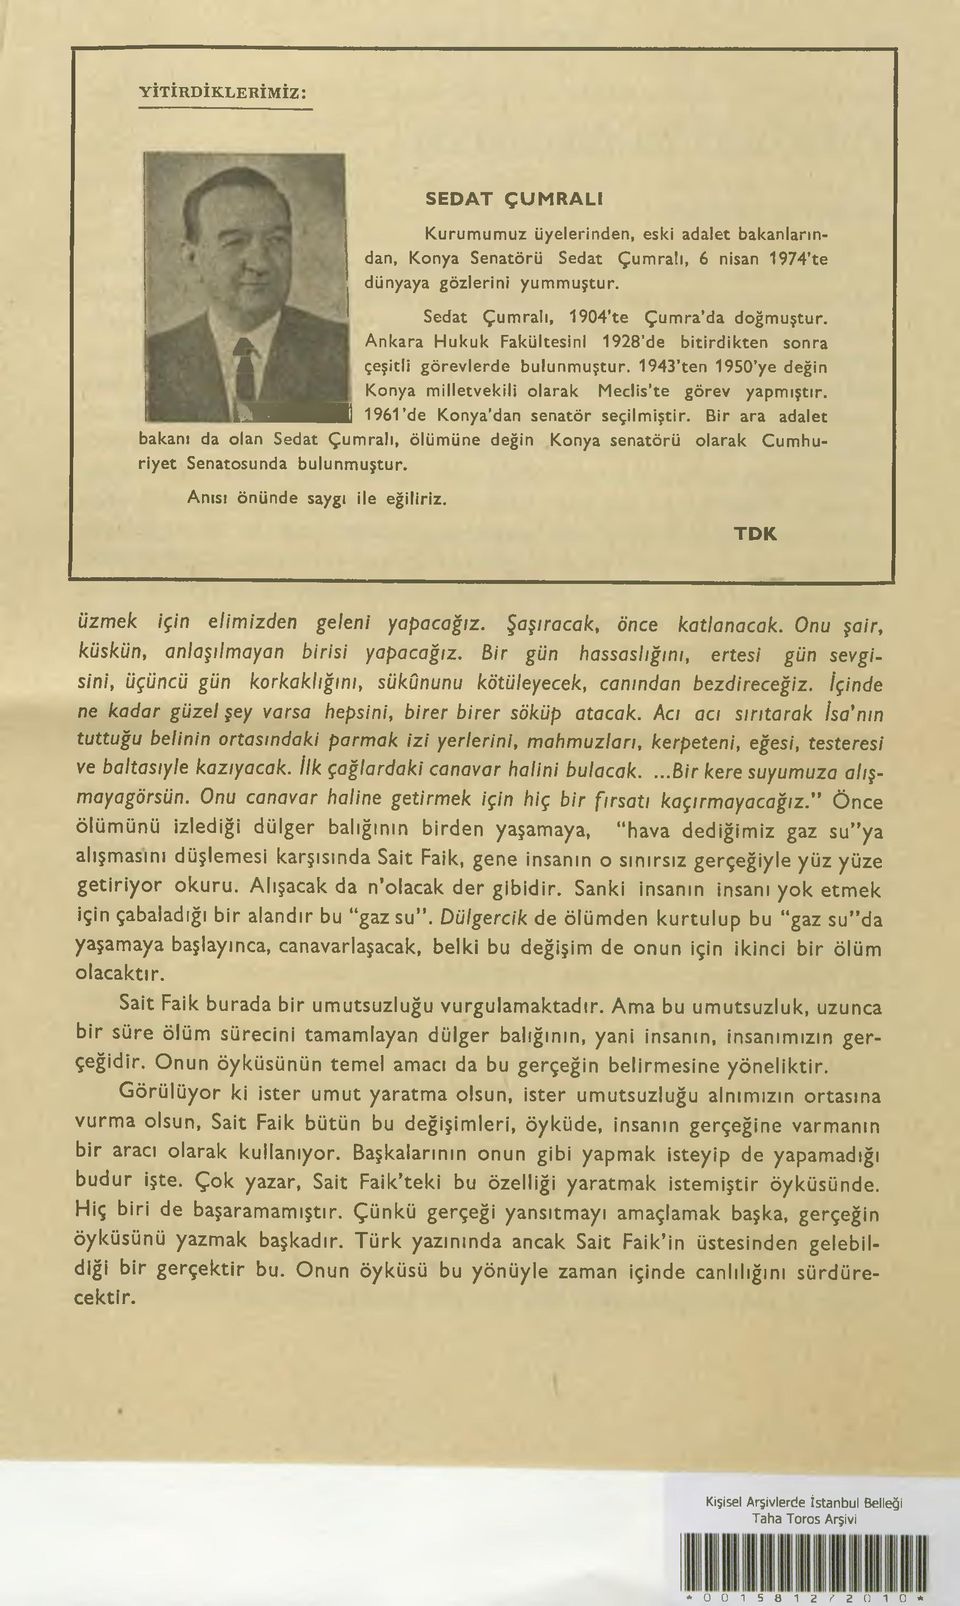 1943 tcn 1950 ye değin Konya m ille tv e k ili o la ra k M e clis'te görev yapm ıştır. L Z f l H H H I 1961'de K o n ya dan senatör se çilm iştir.